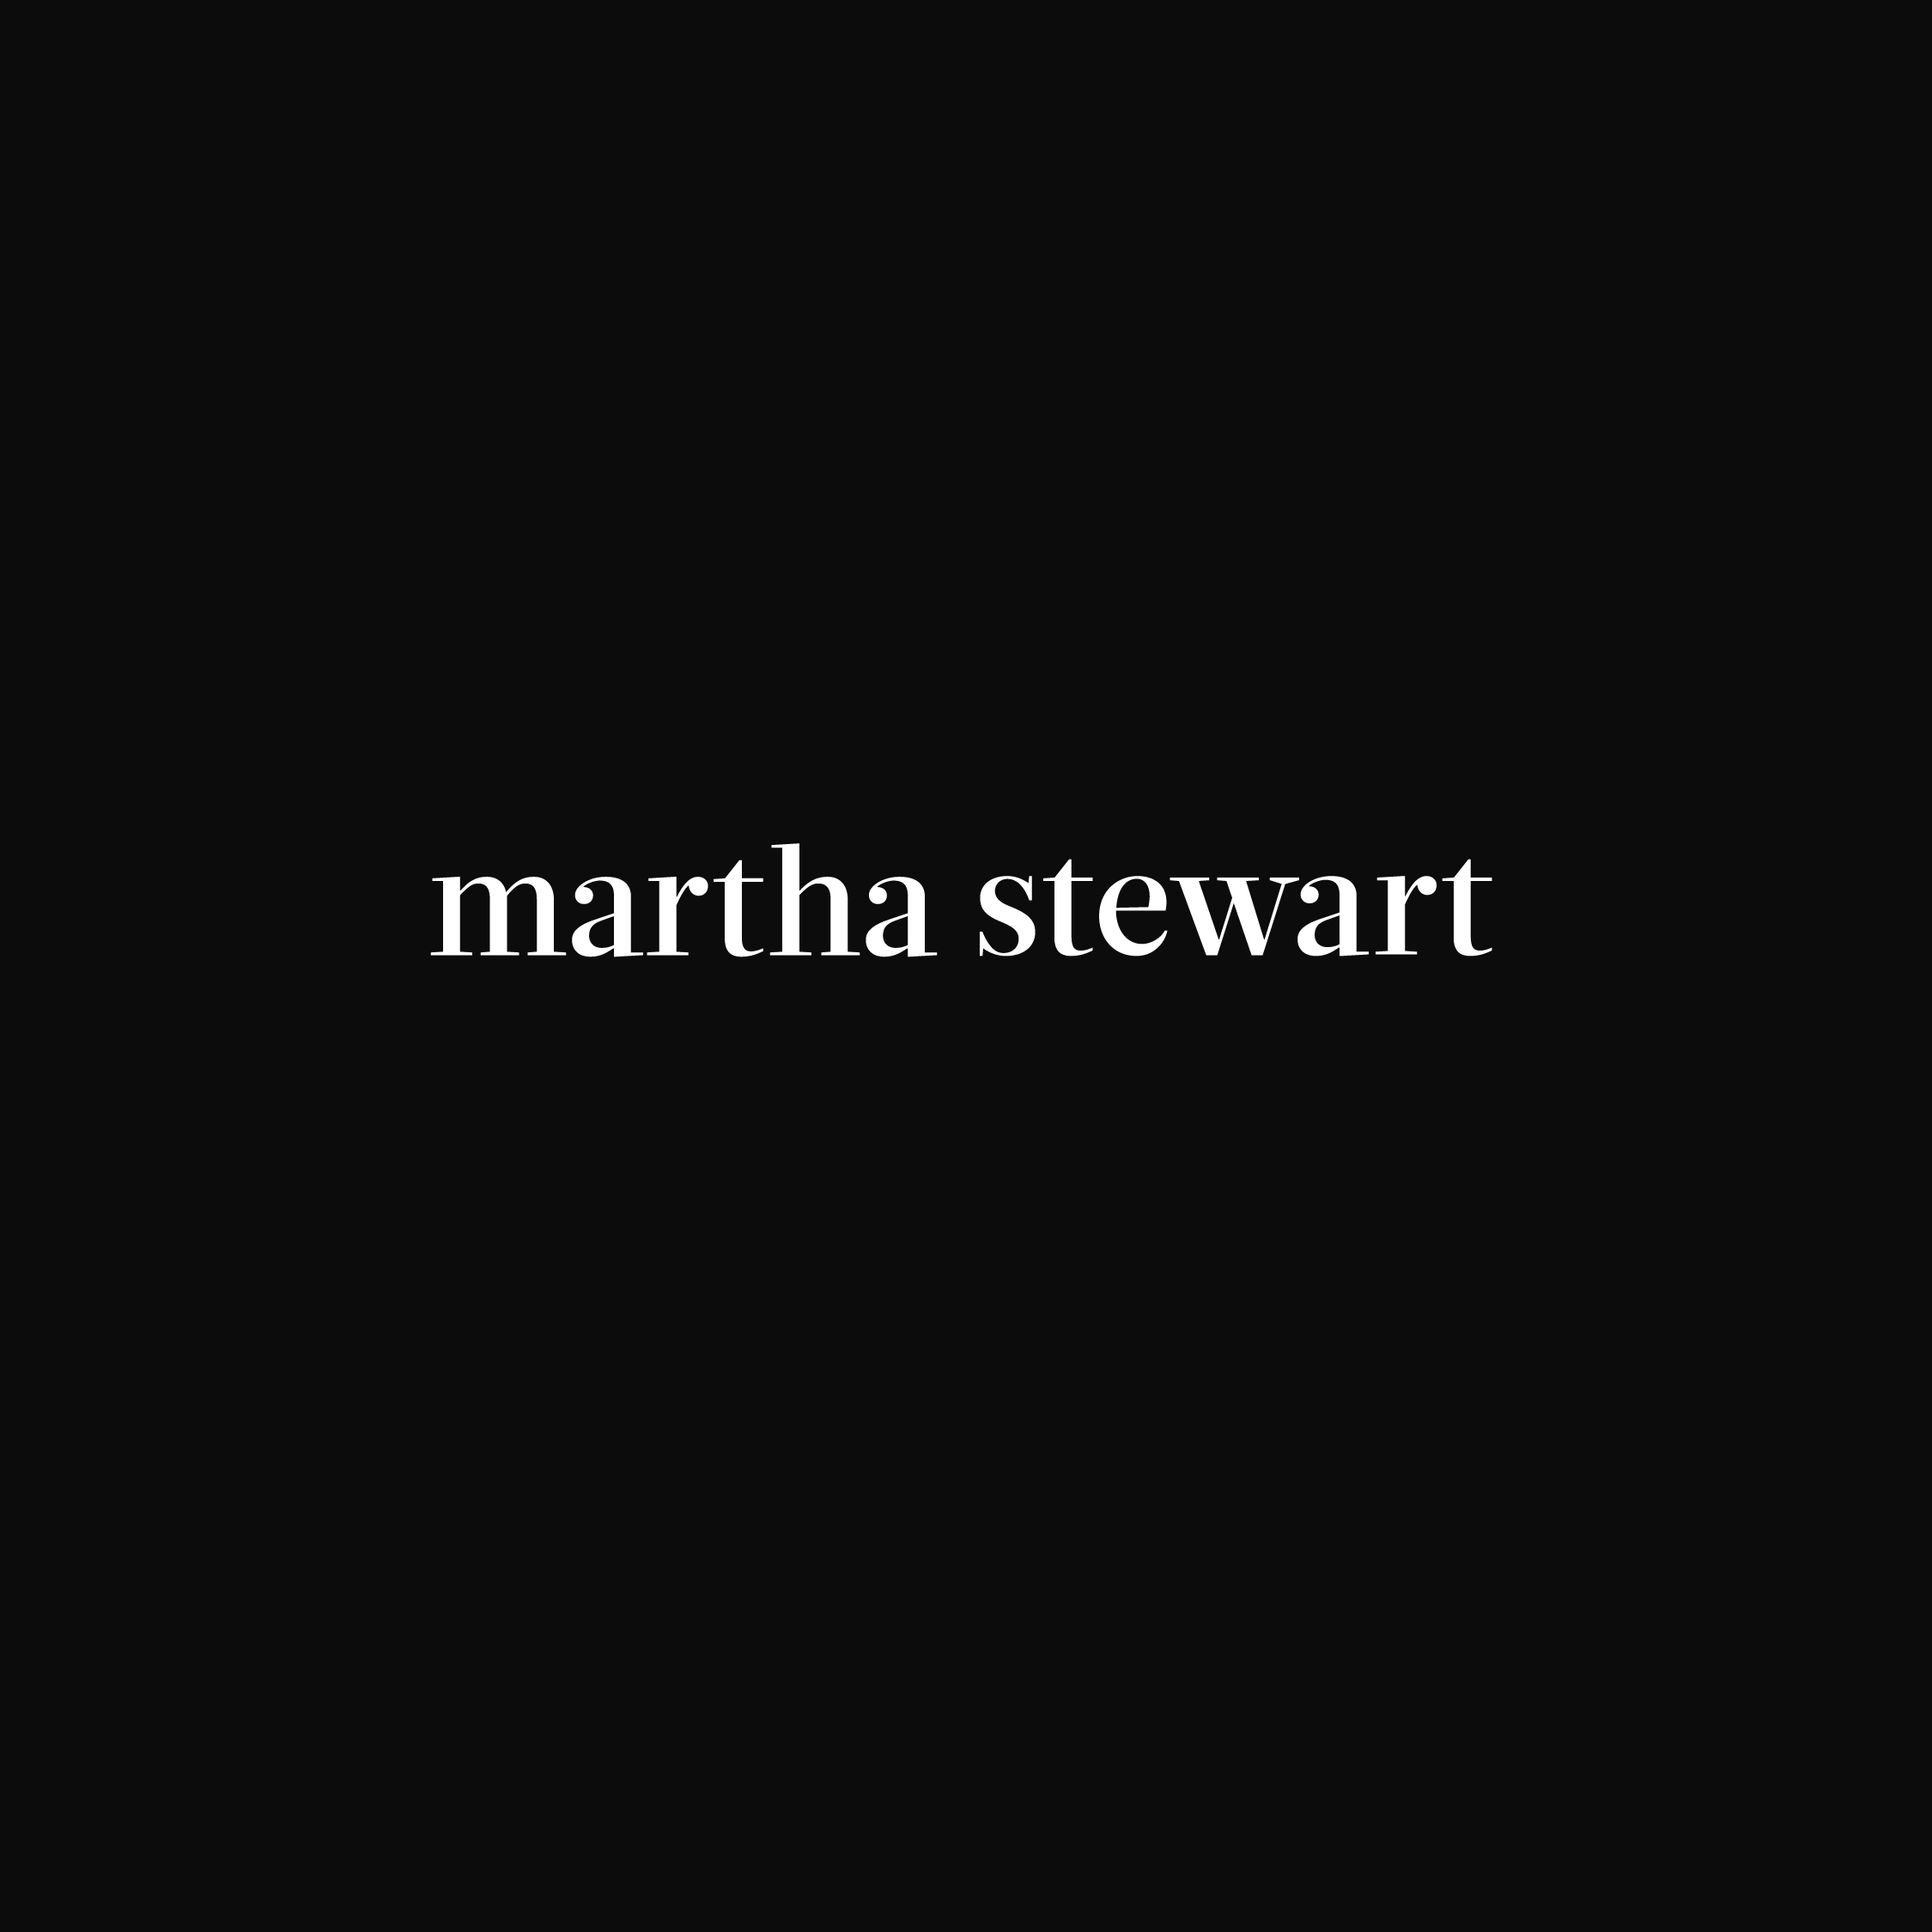 www.marthastewart.com